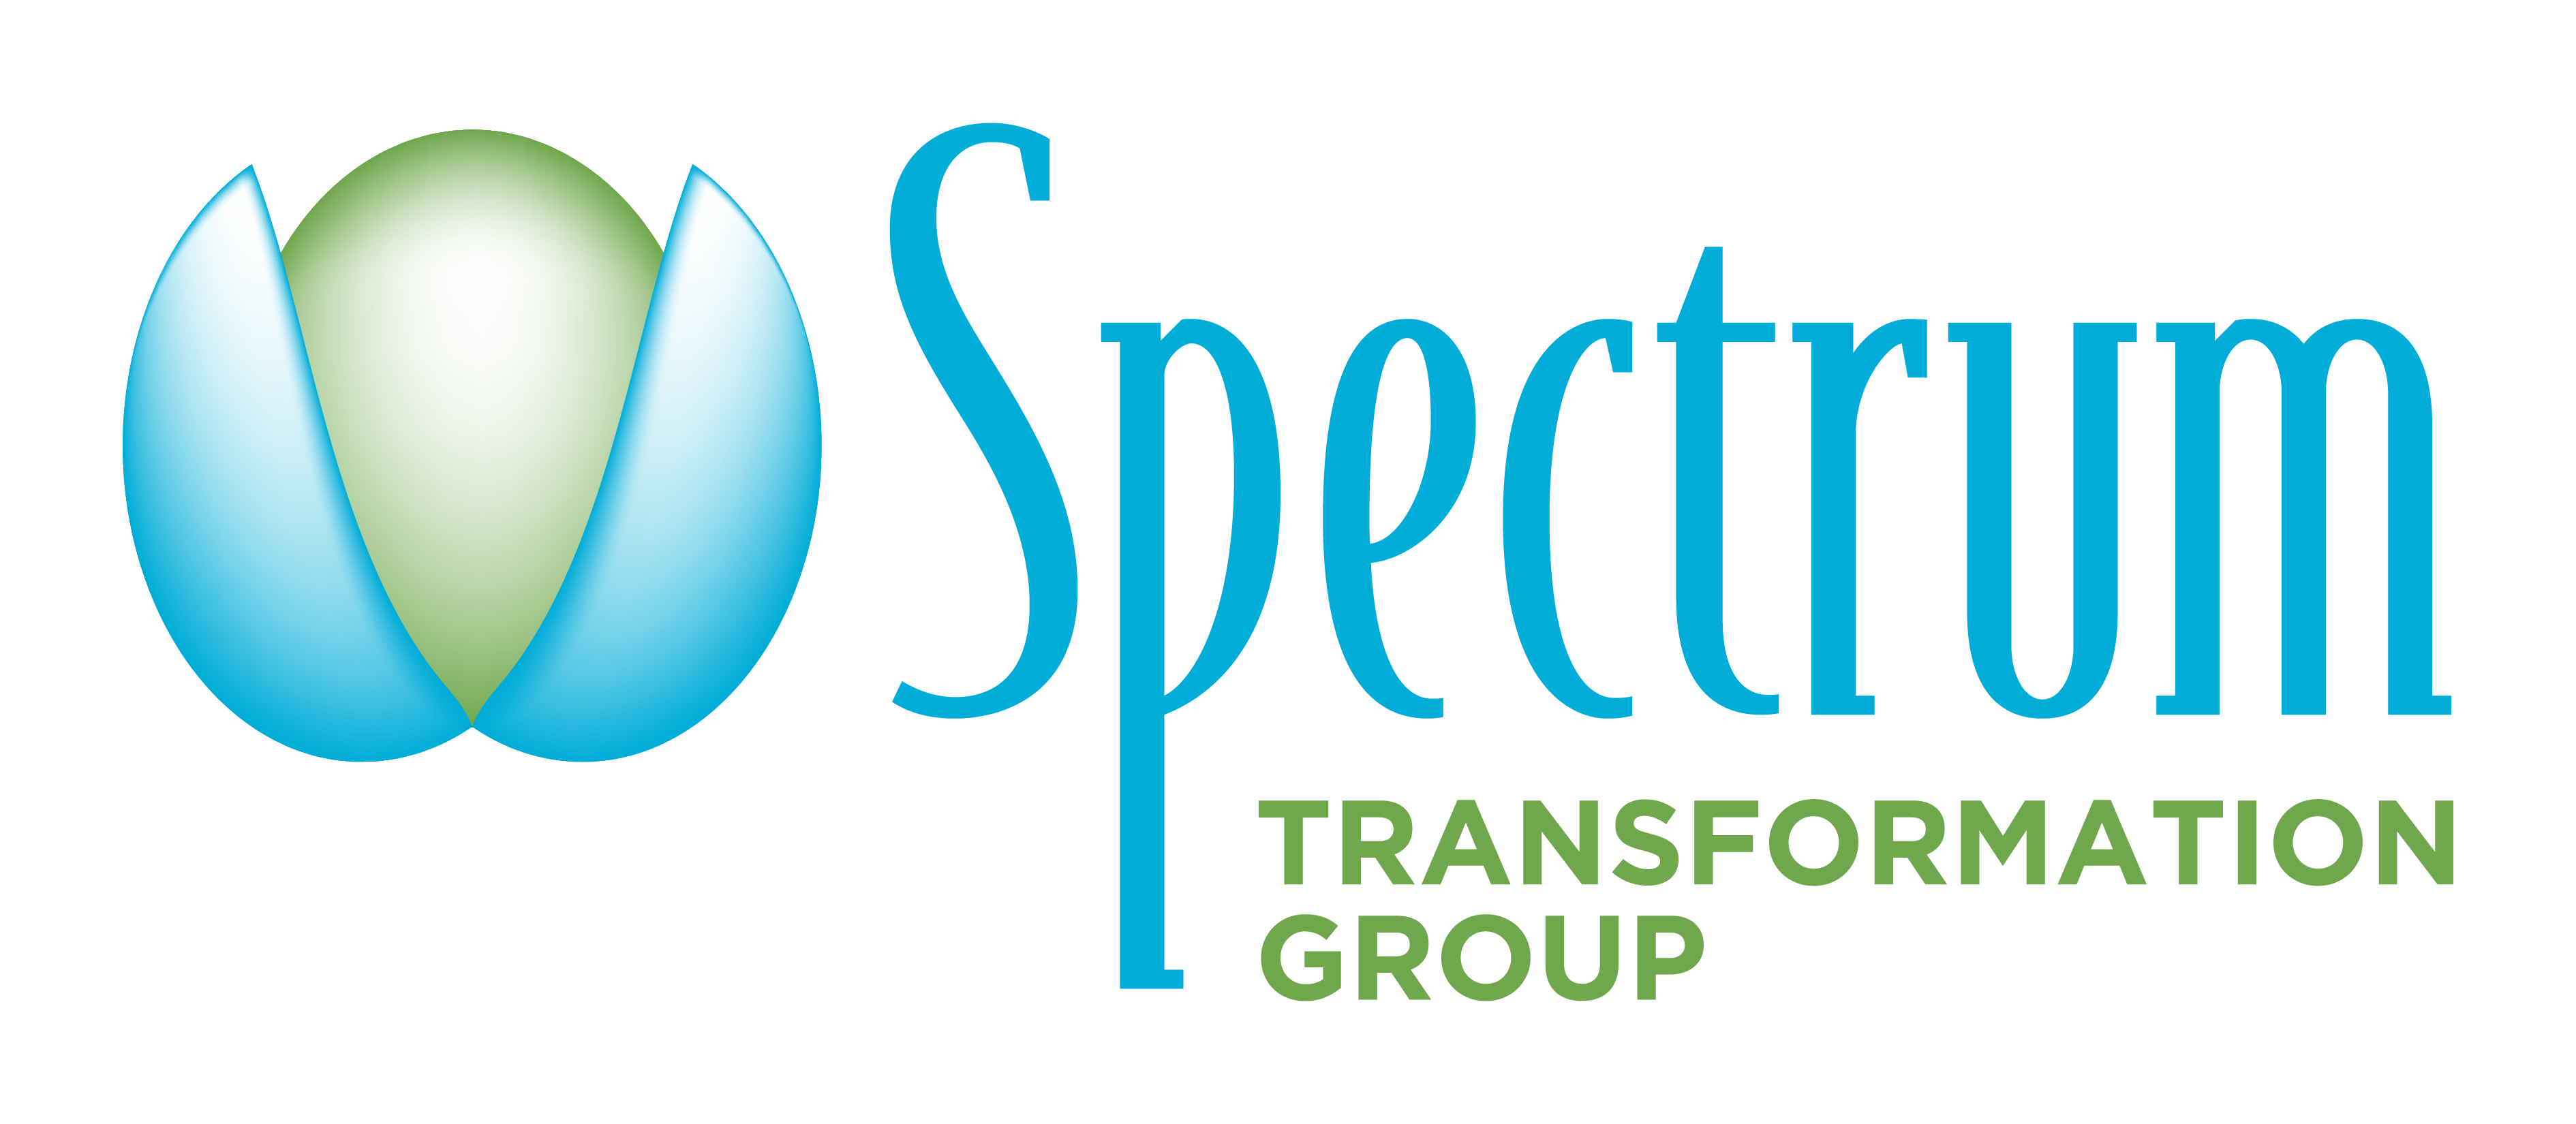 Spectrum Transformation Group logo